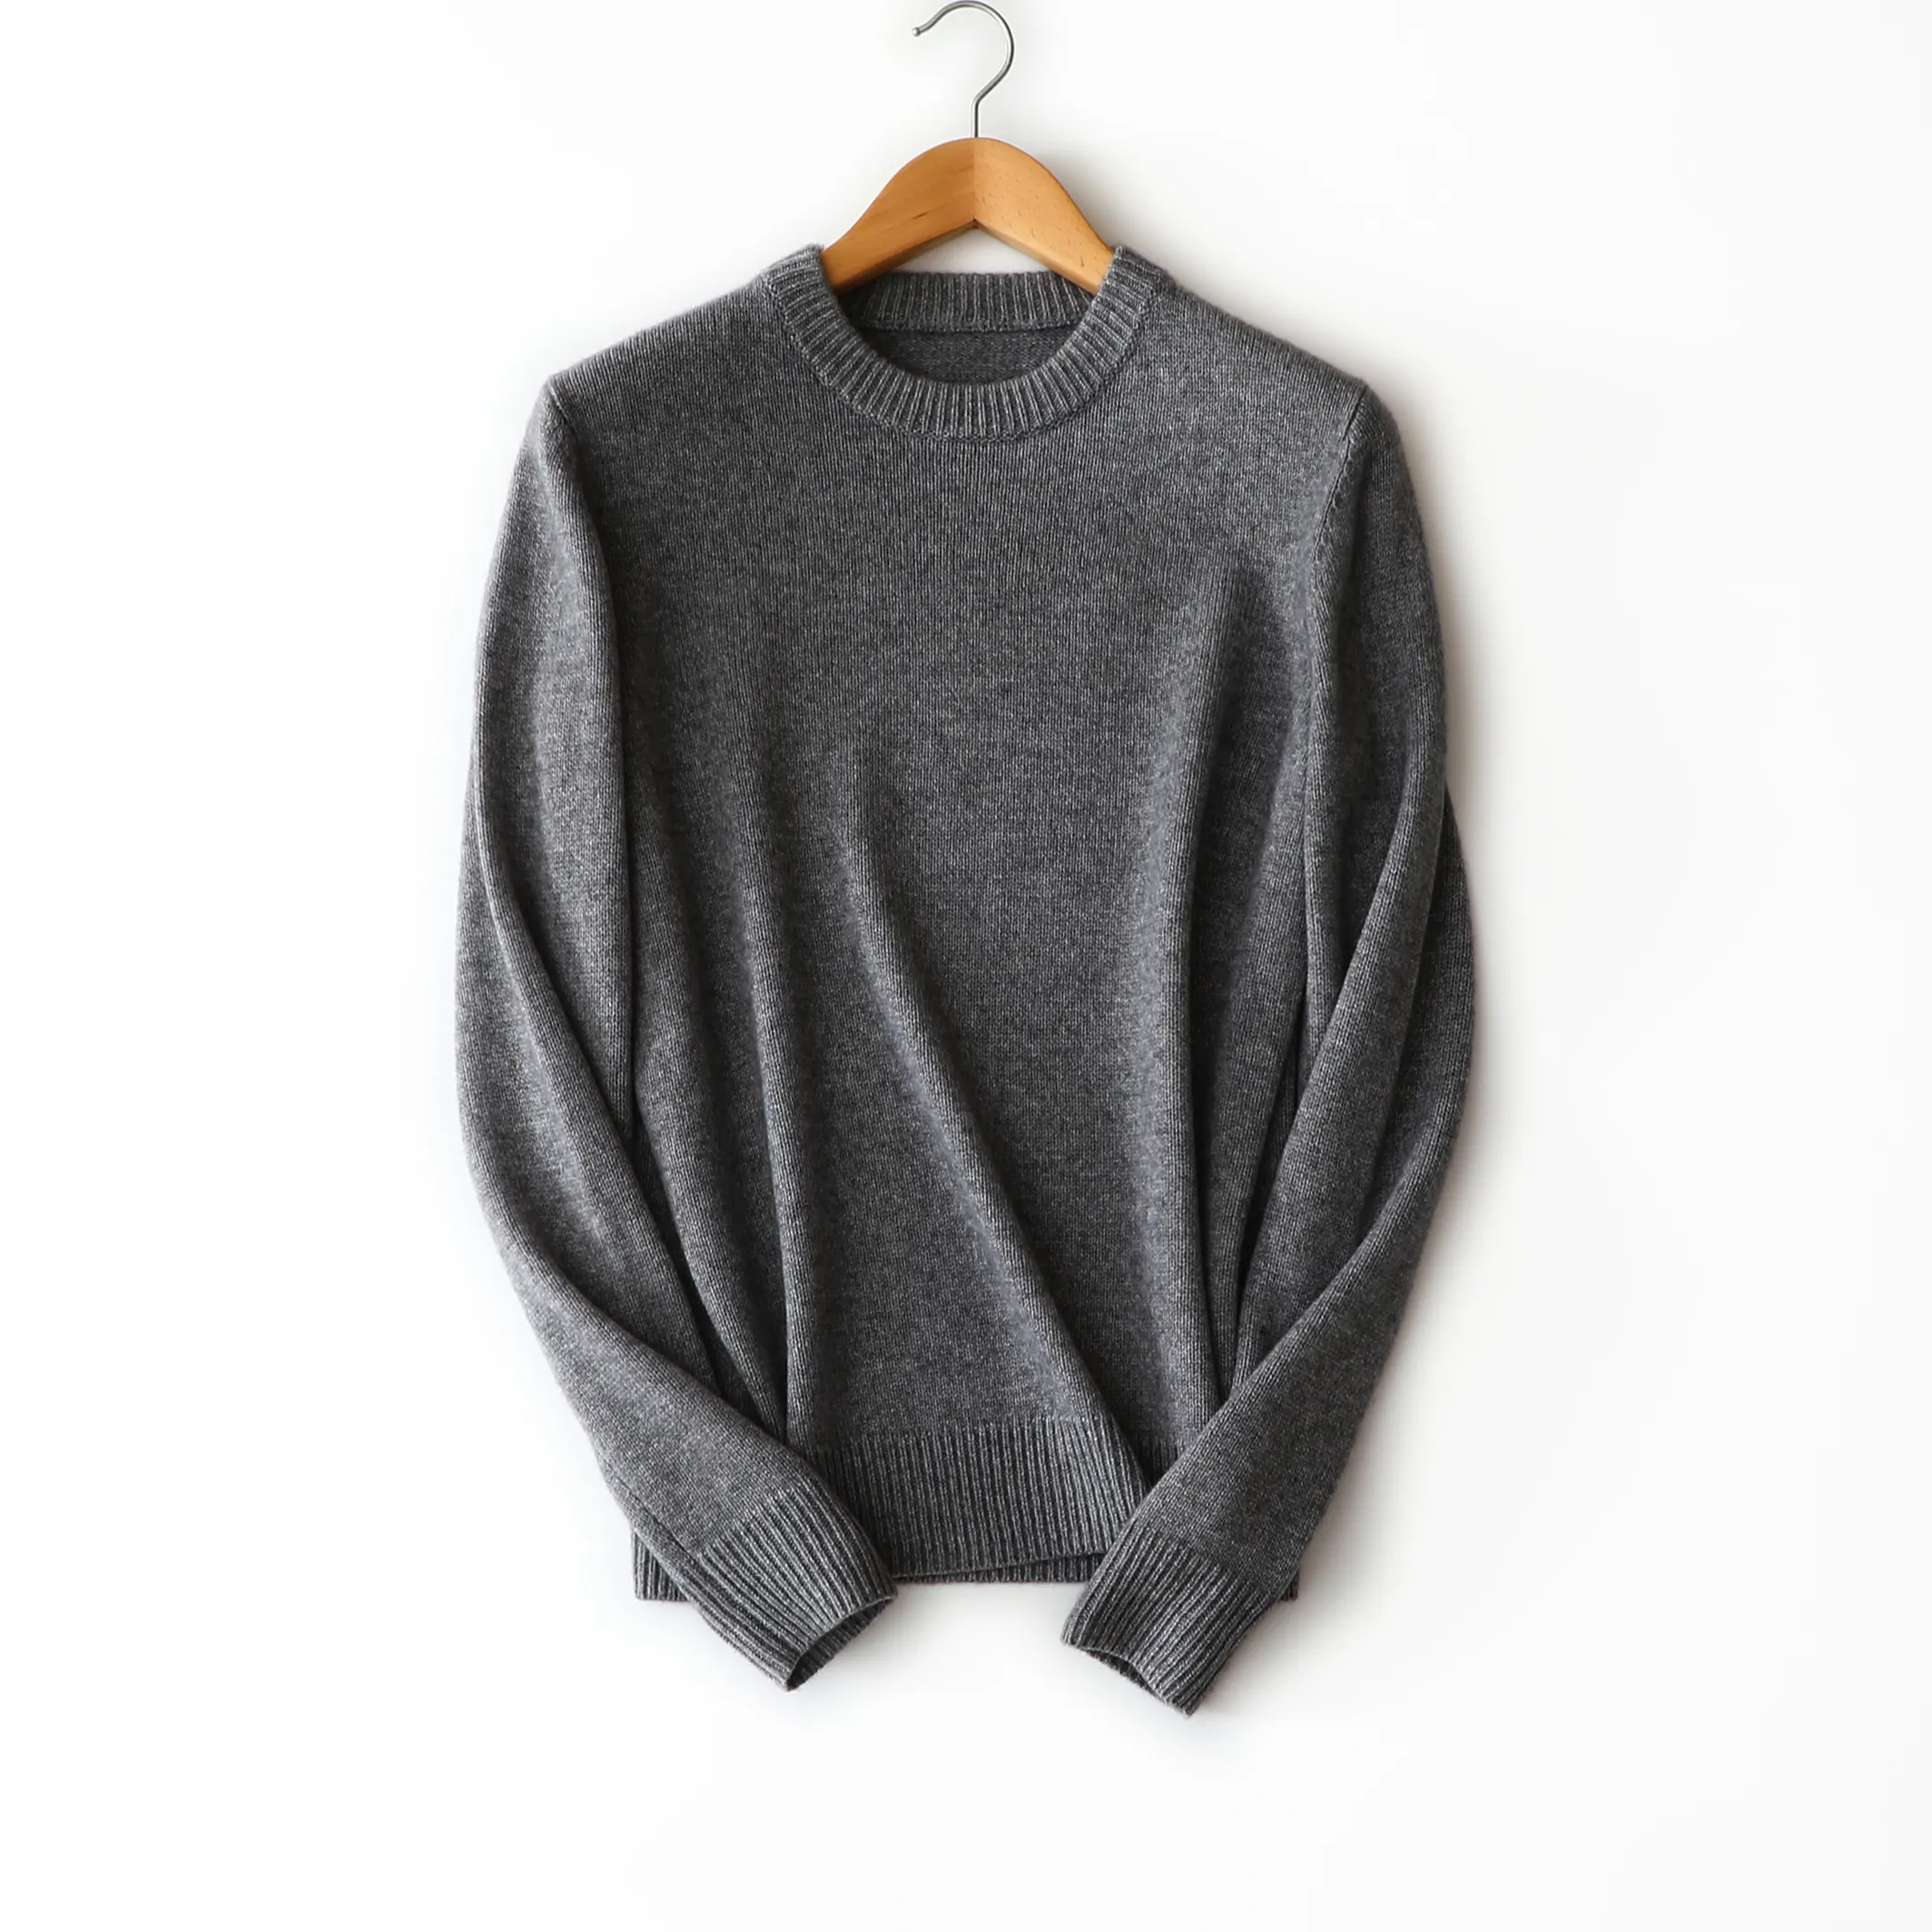 Winter 100% pure cashmere pullover sweater men's crew neck jumpers cashmere sweater men